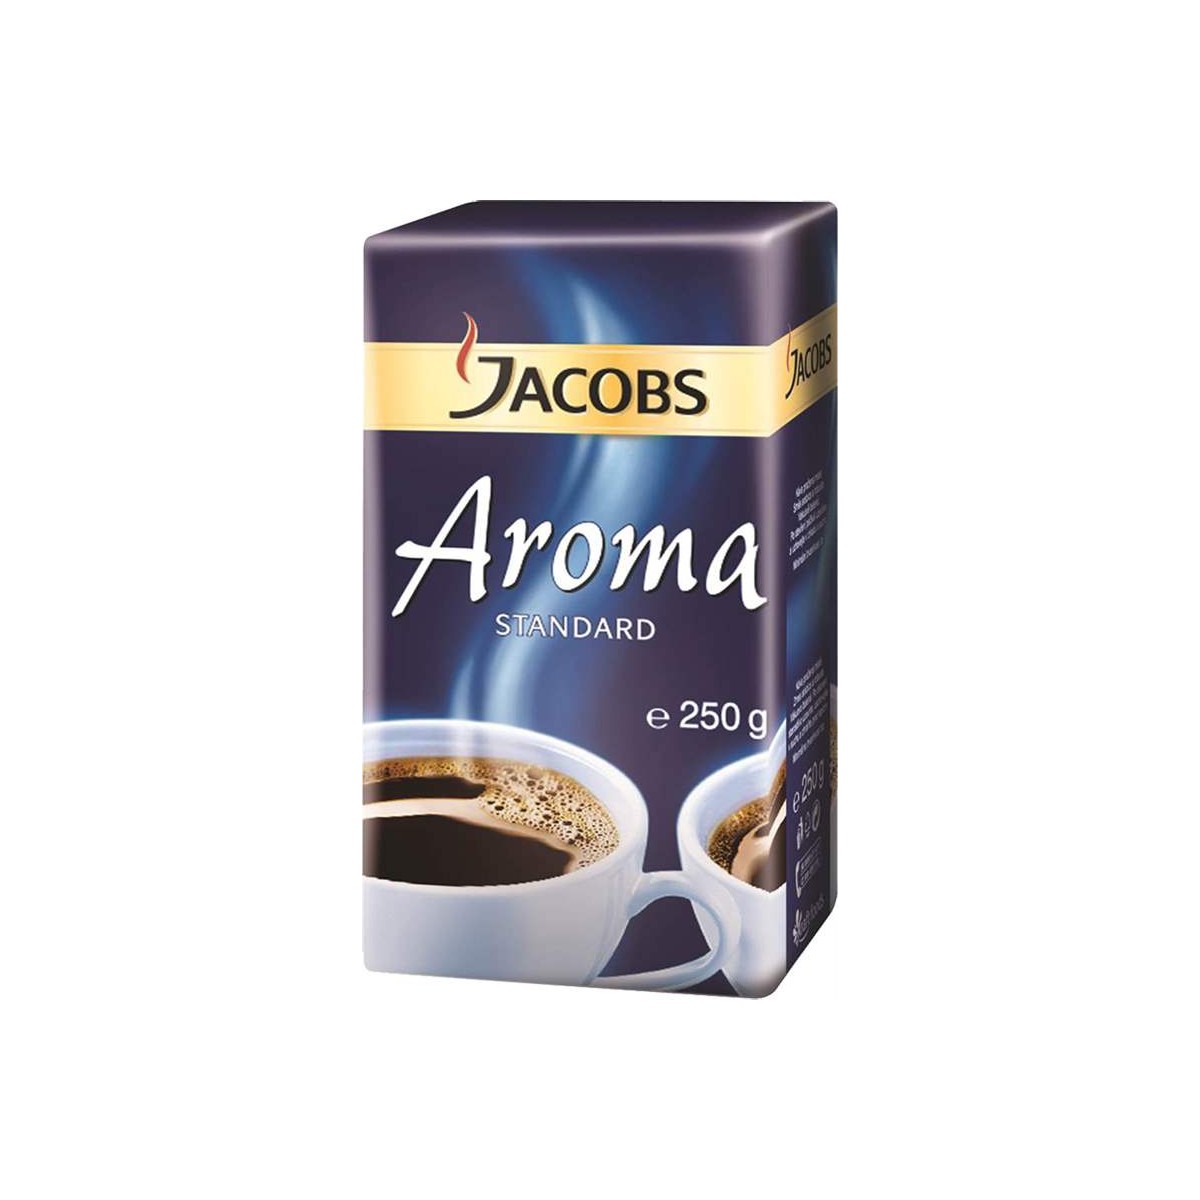 Jacobs Aroma Standard 250g